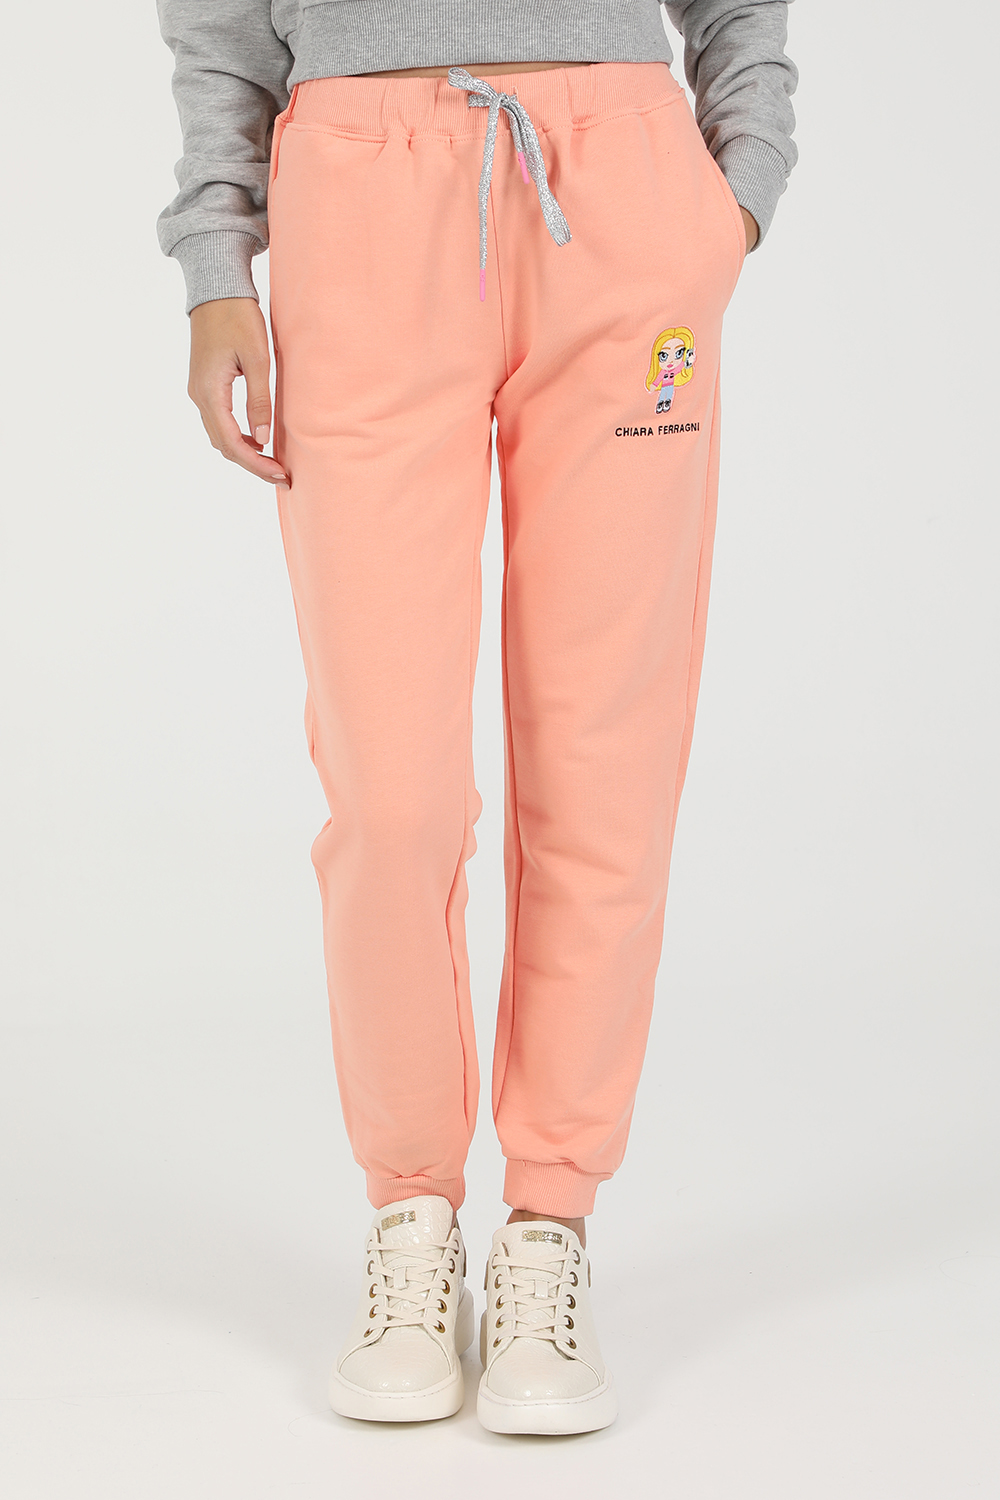 CHIARRA FERRAGNI – Γυναικείο παντελόνι φόρμας CHIARRA FERRAGNI MASCOTTE PANT ροζ 1826144.0-00P7